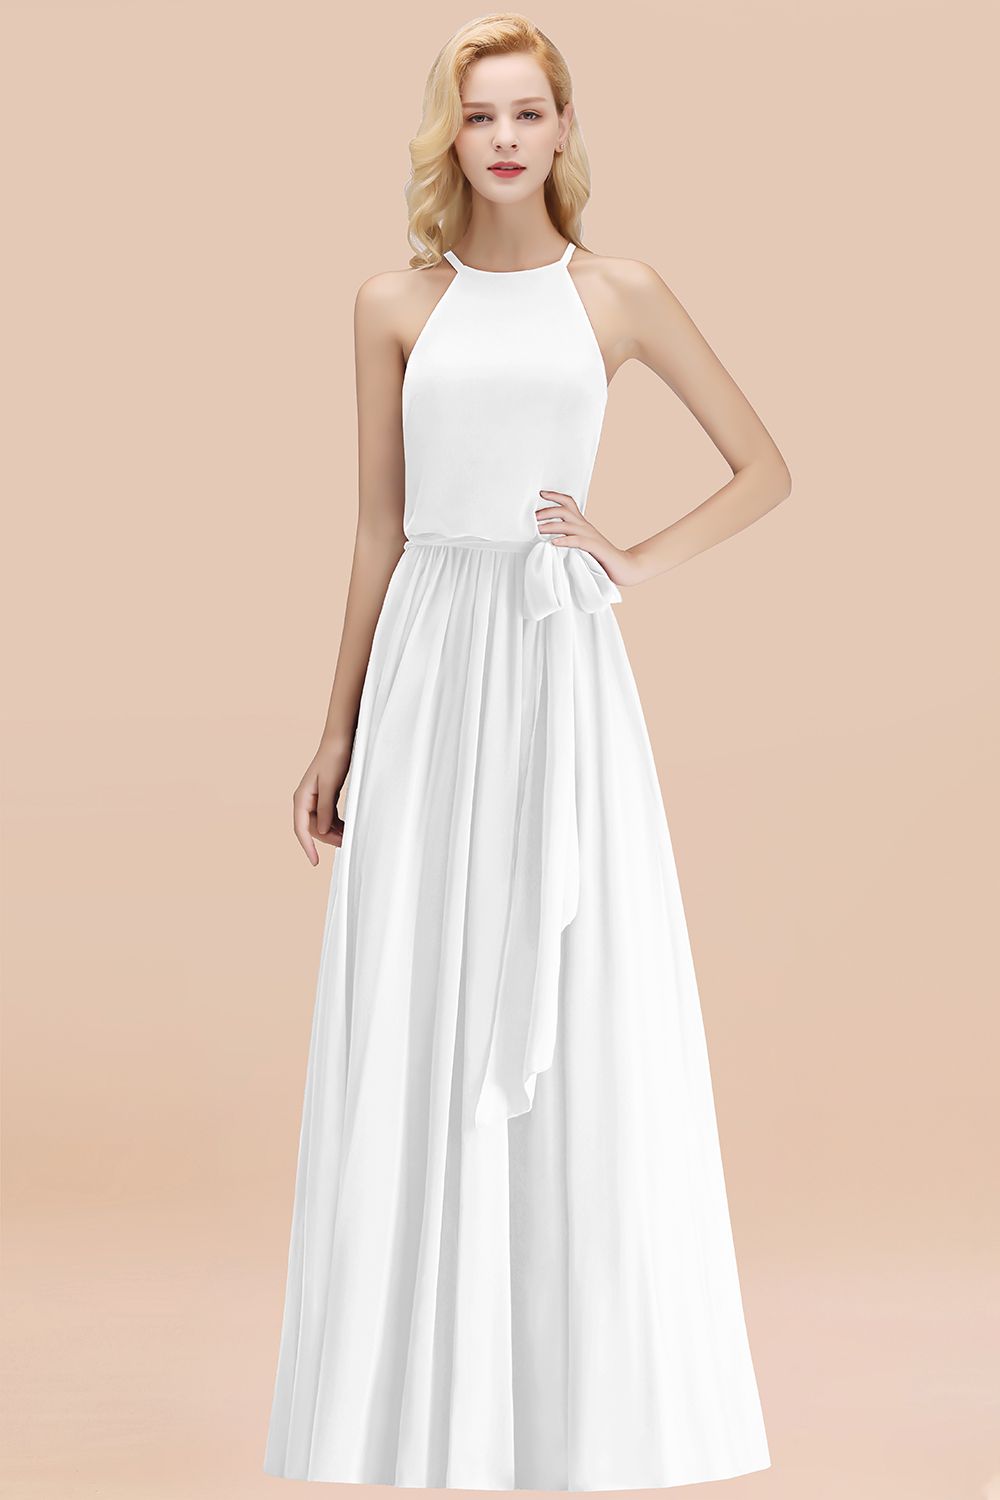 Affordable Halter Bow Long Bridesmaid Dress Modest Burgundy Chiffon Wedding Party Dress-27dress